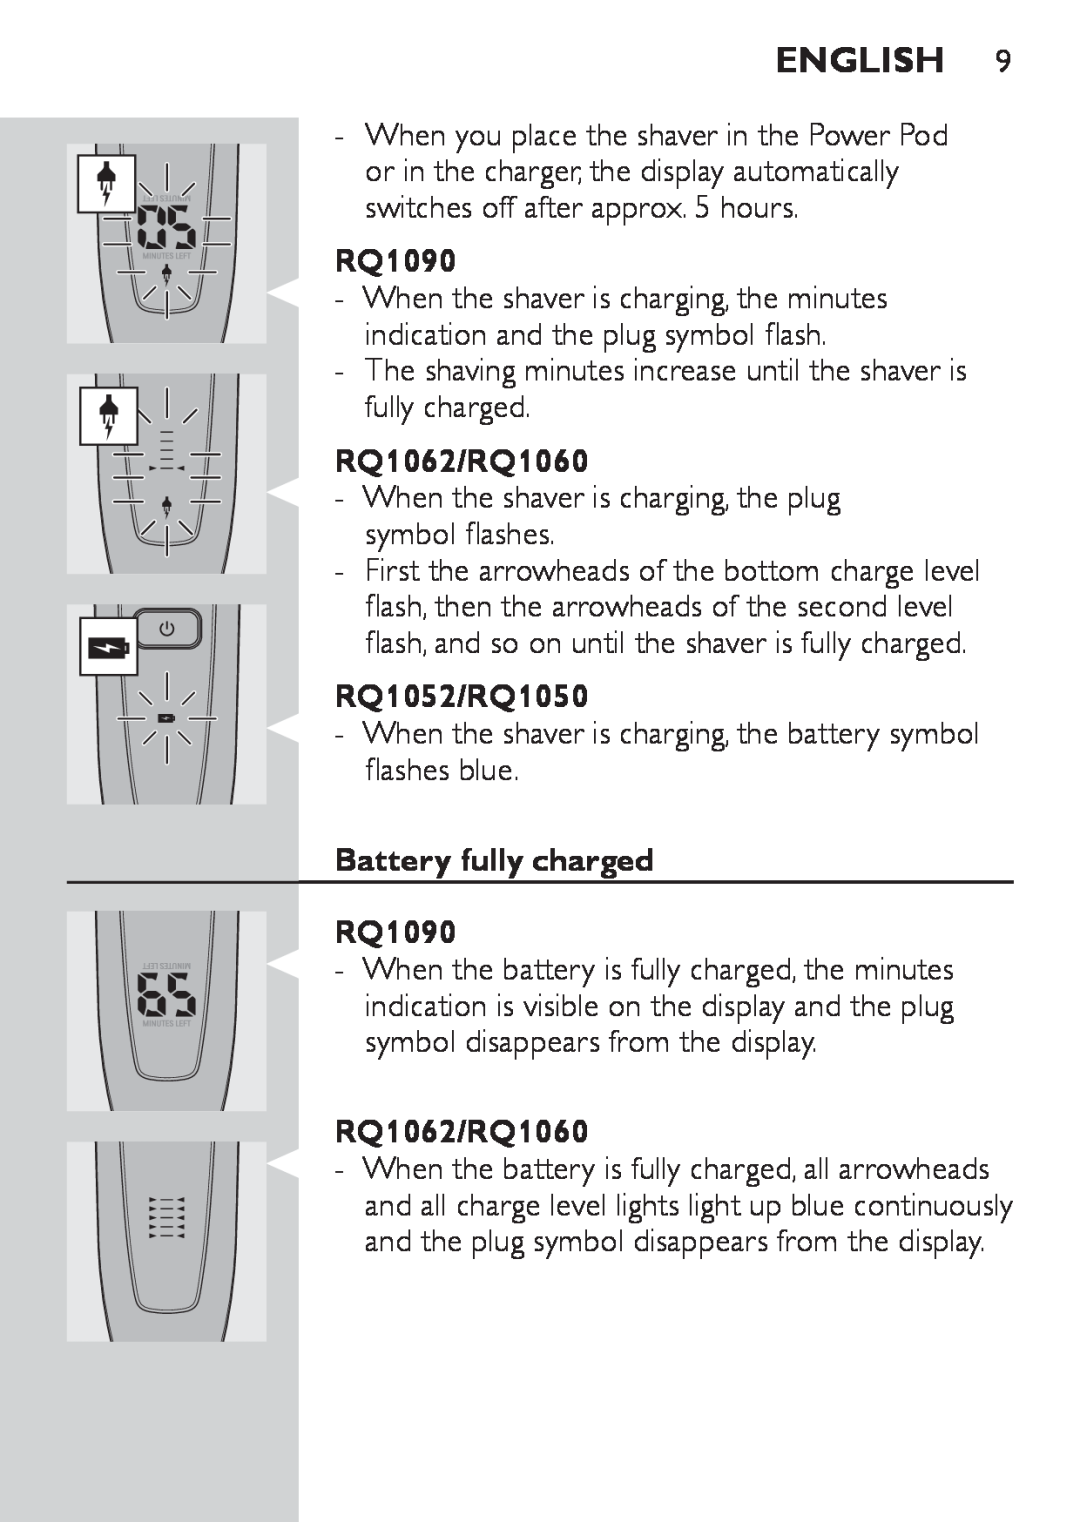 Philips manual RQ1062/RQ1060, RQ1052/RQ1050, Battery fully charged RQ1090, English 